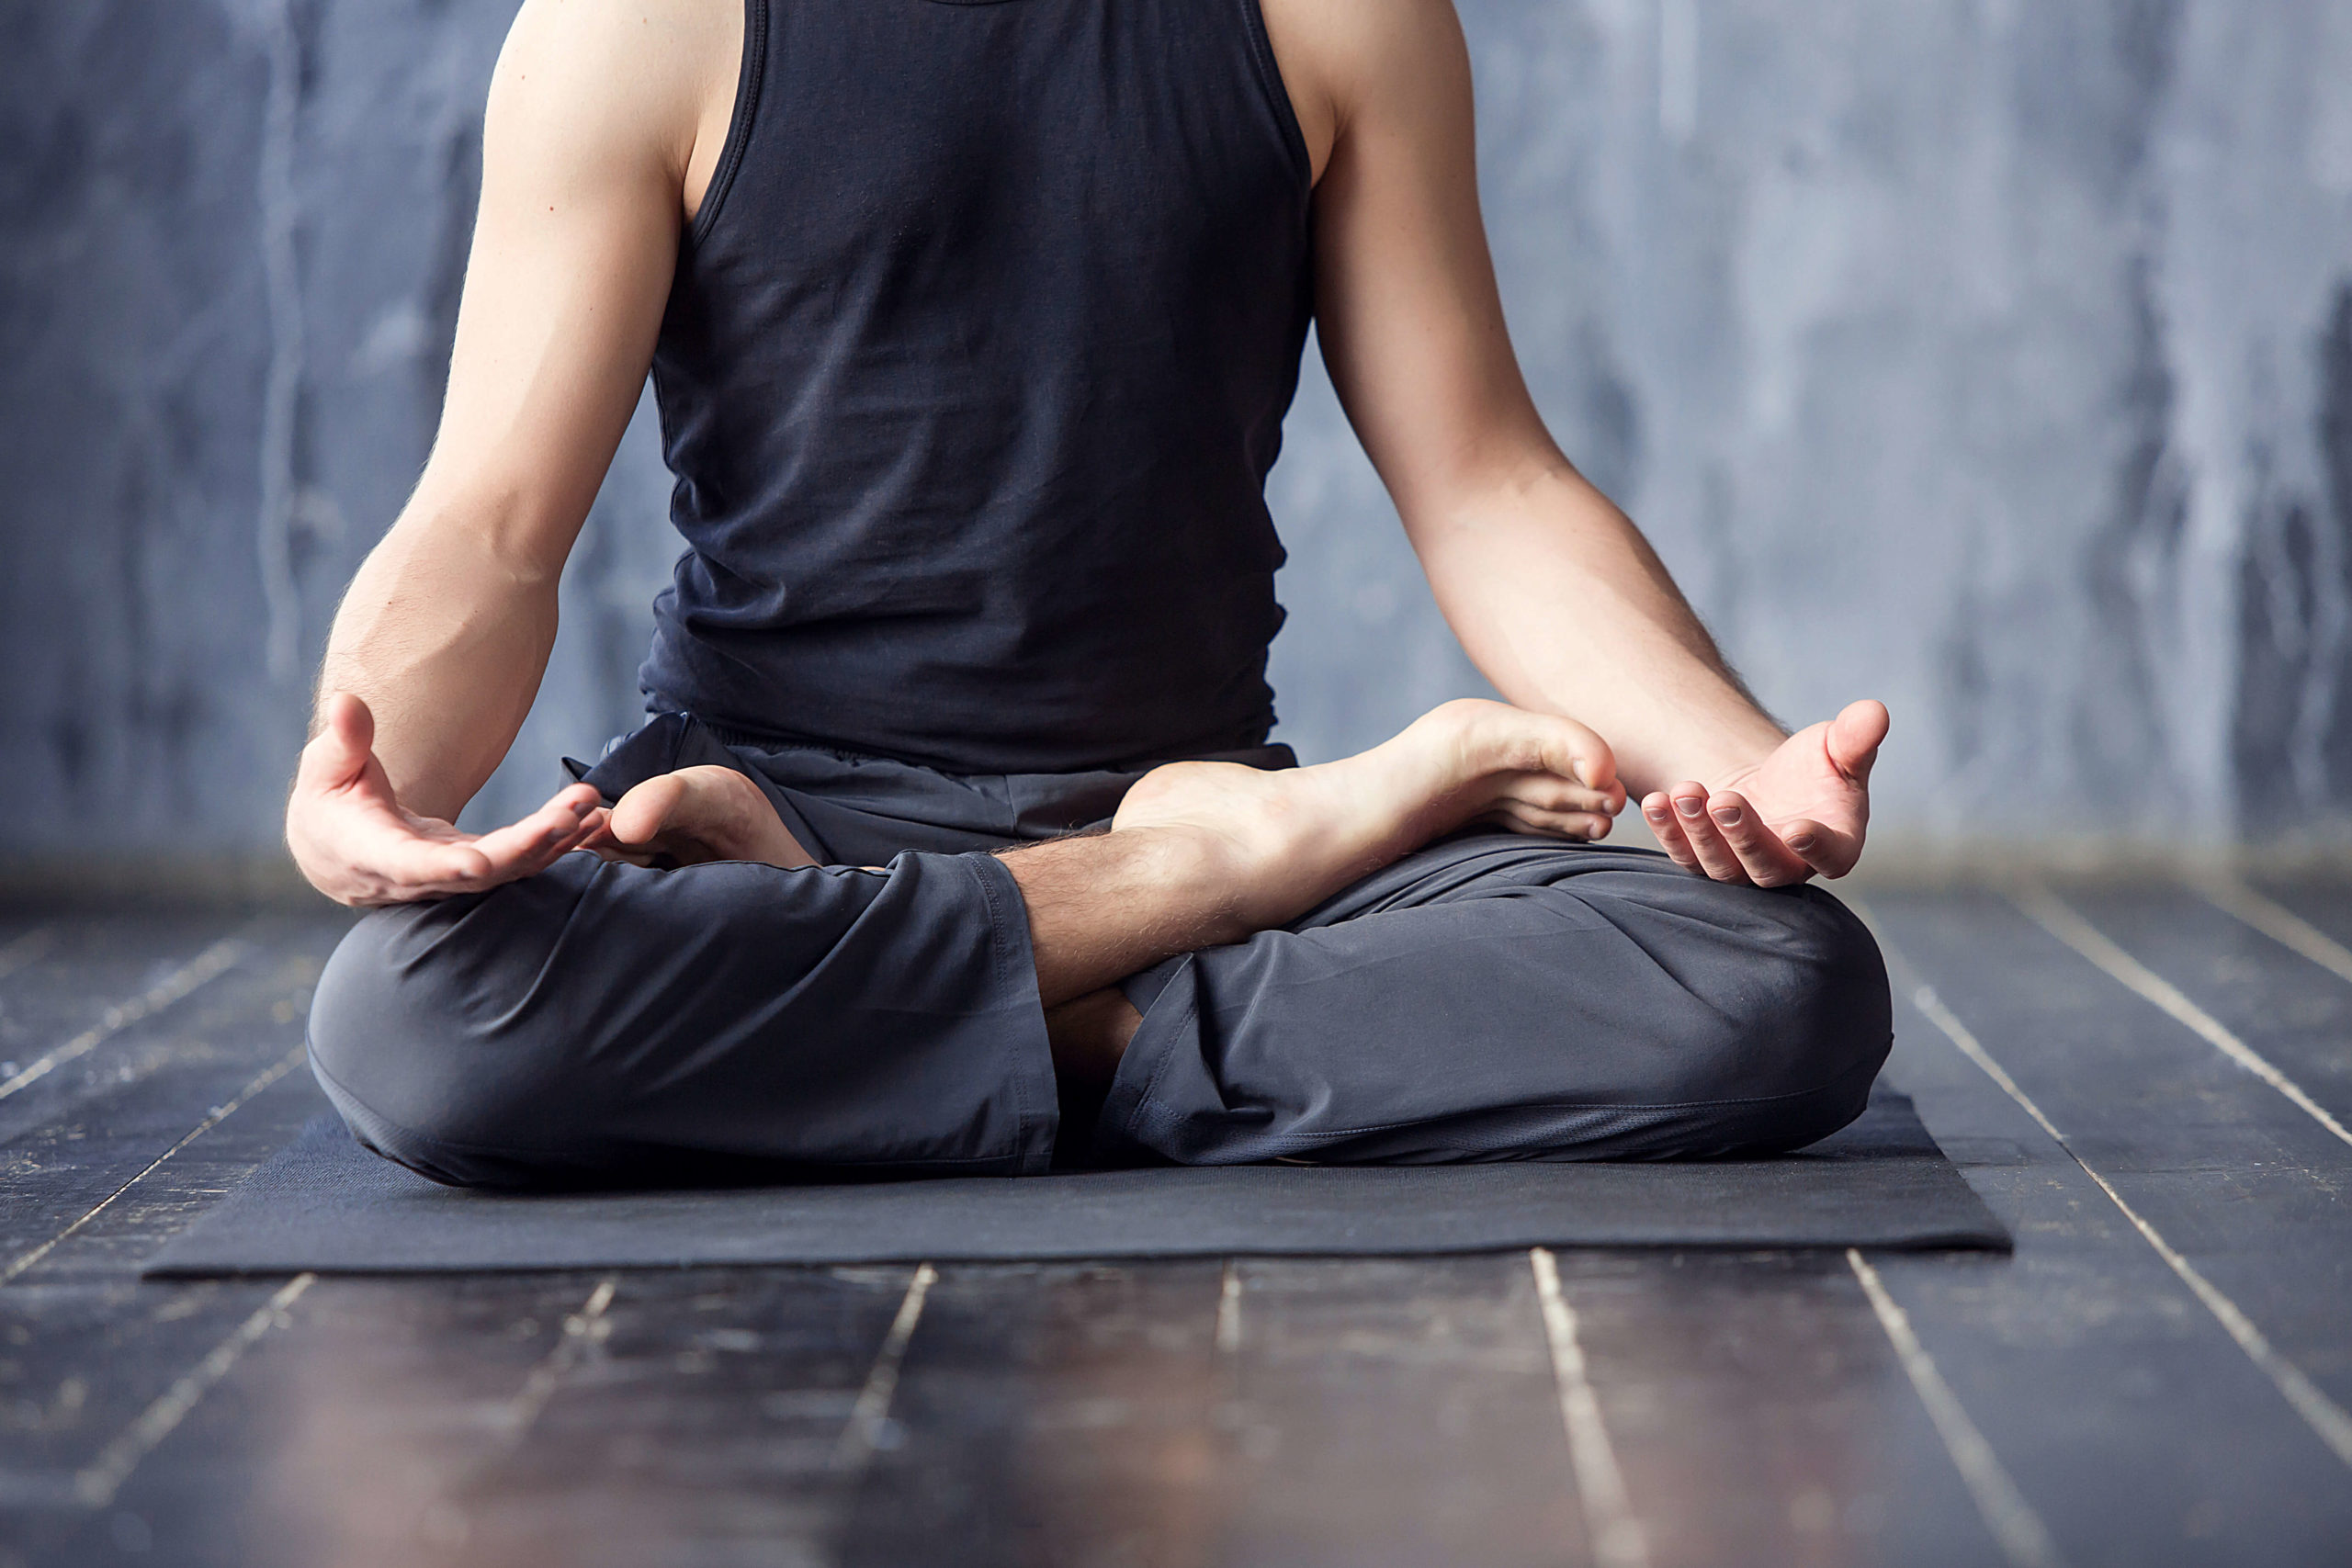 Le pranayama : exercices de respiration du yoga expliqués